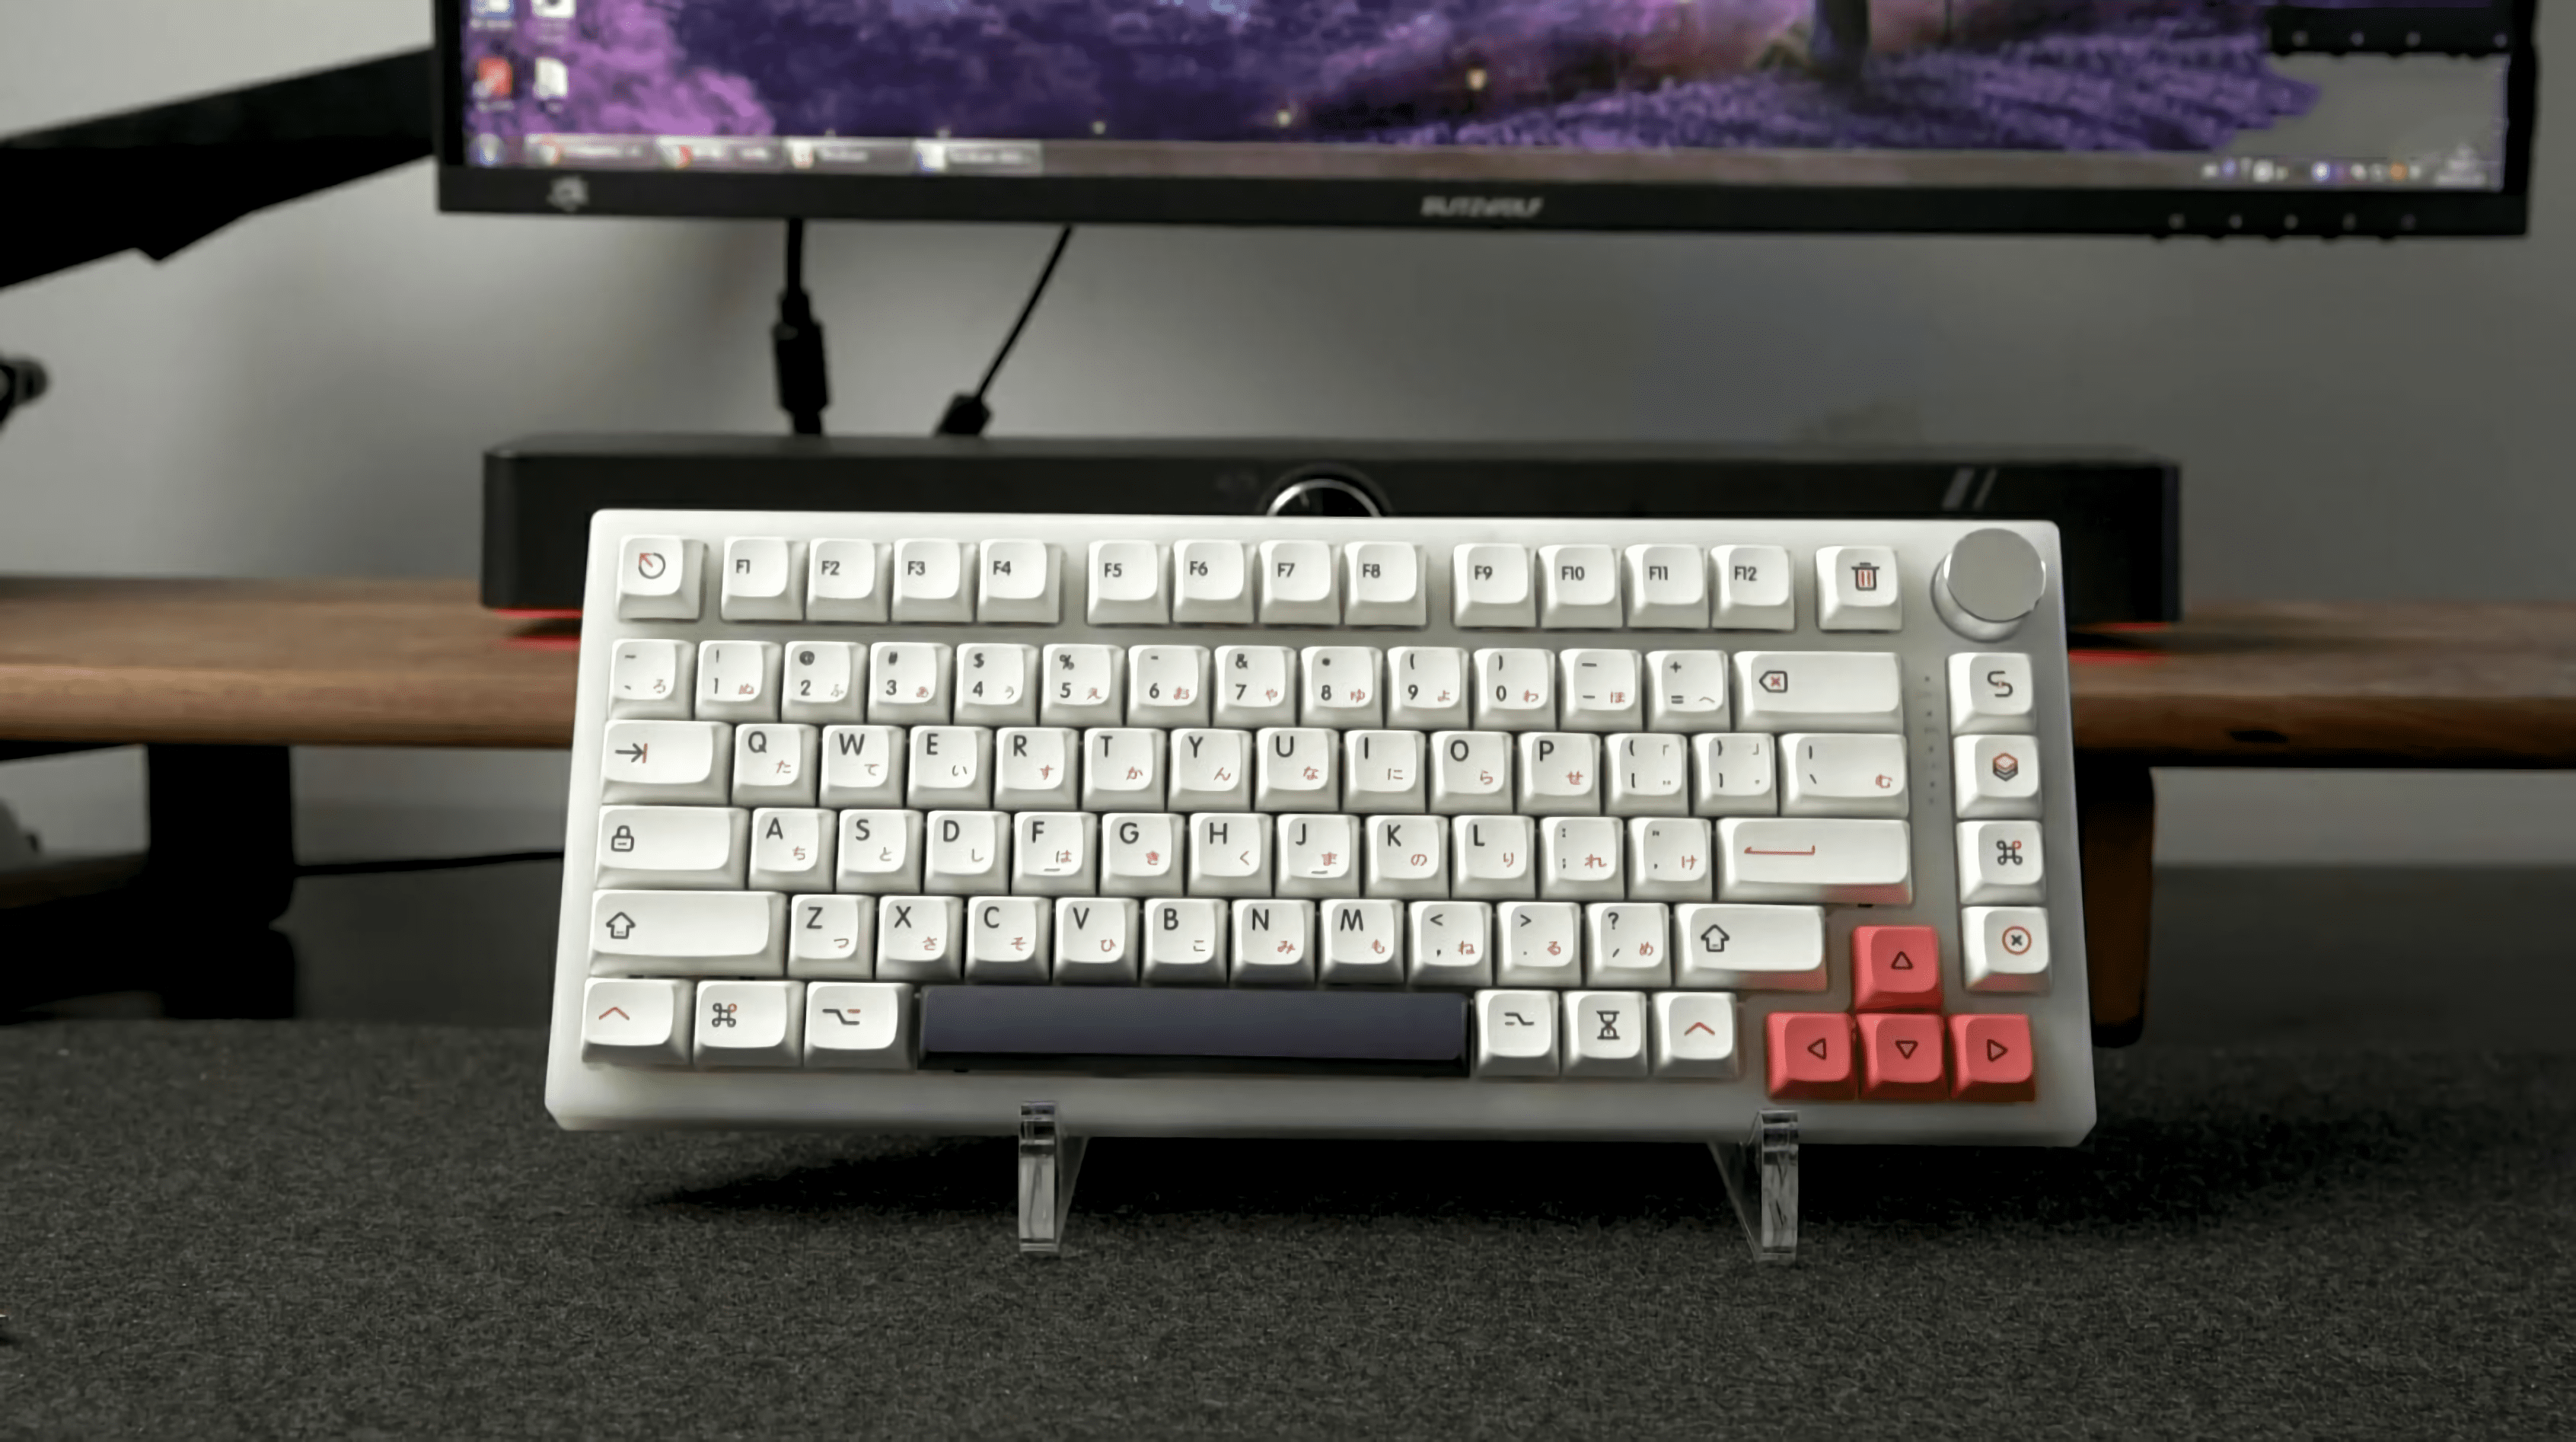 Feker IK75 V3 Review - New Budget Mechanical Keyboard